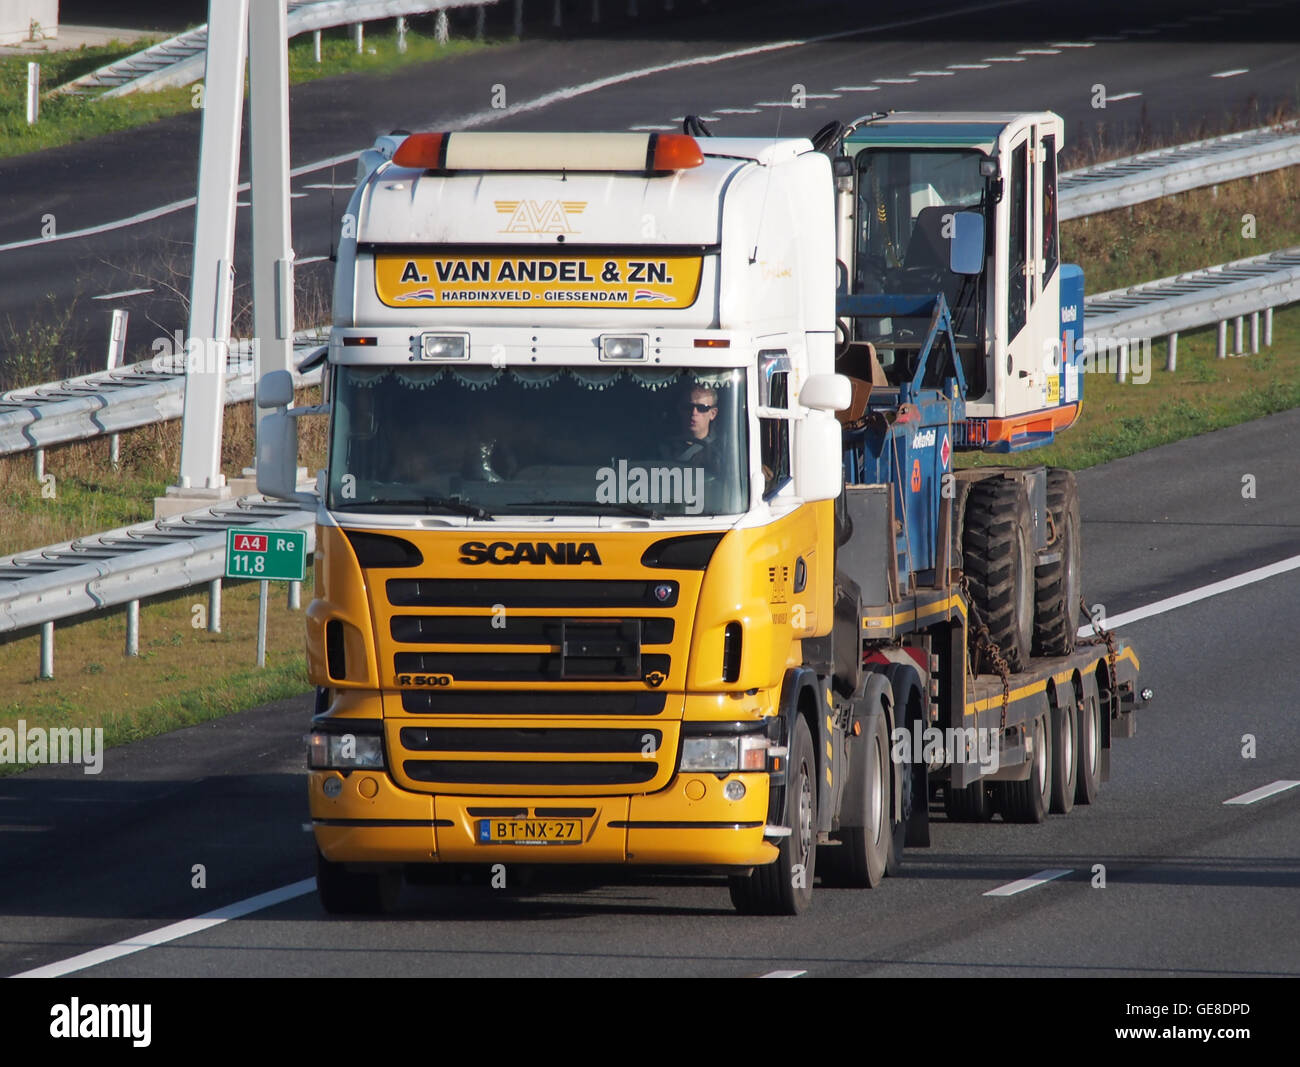 R500 Scania, A van Andel & Zn Stock Photo